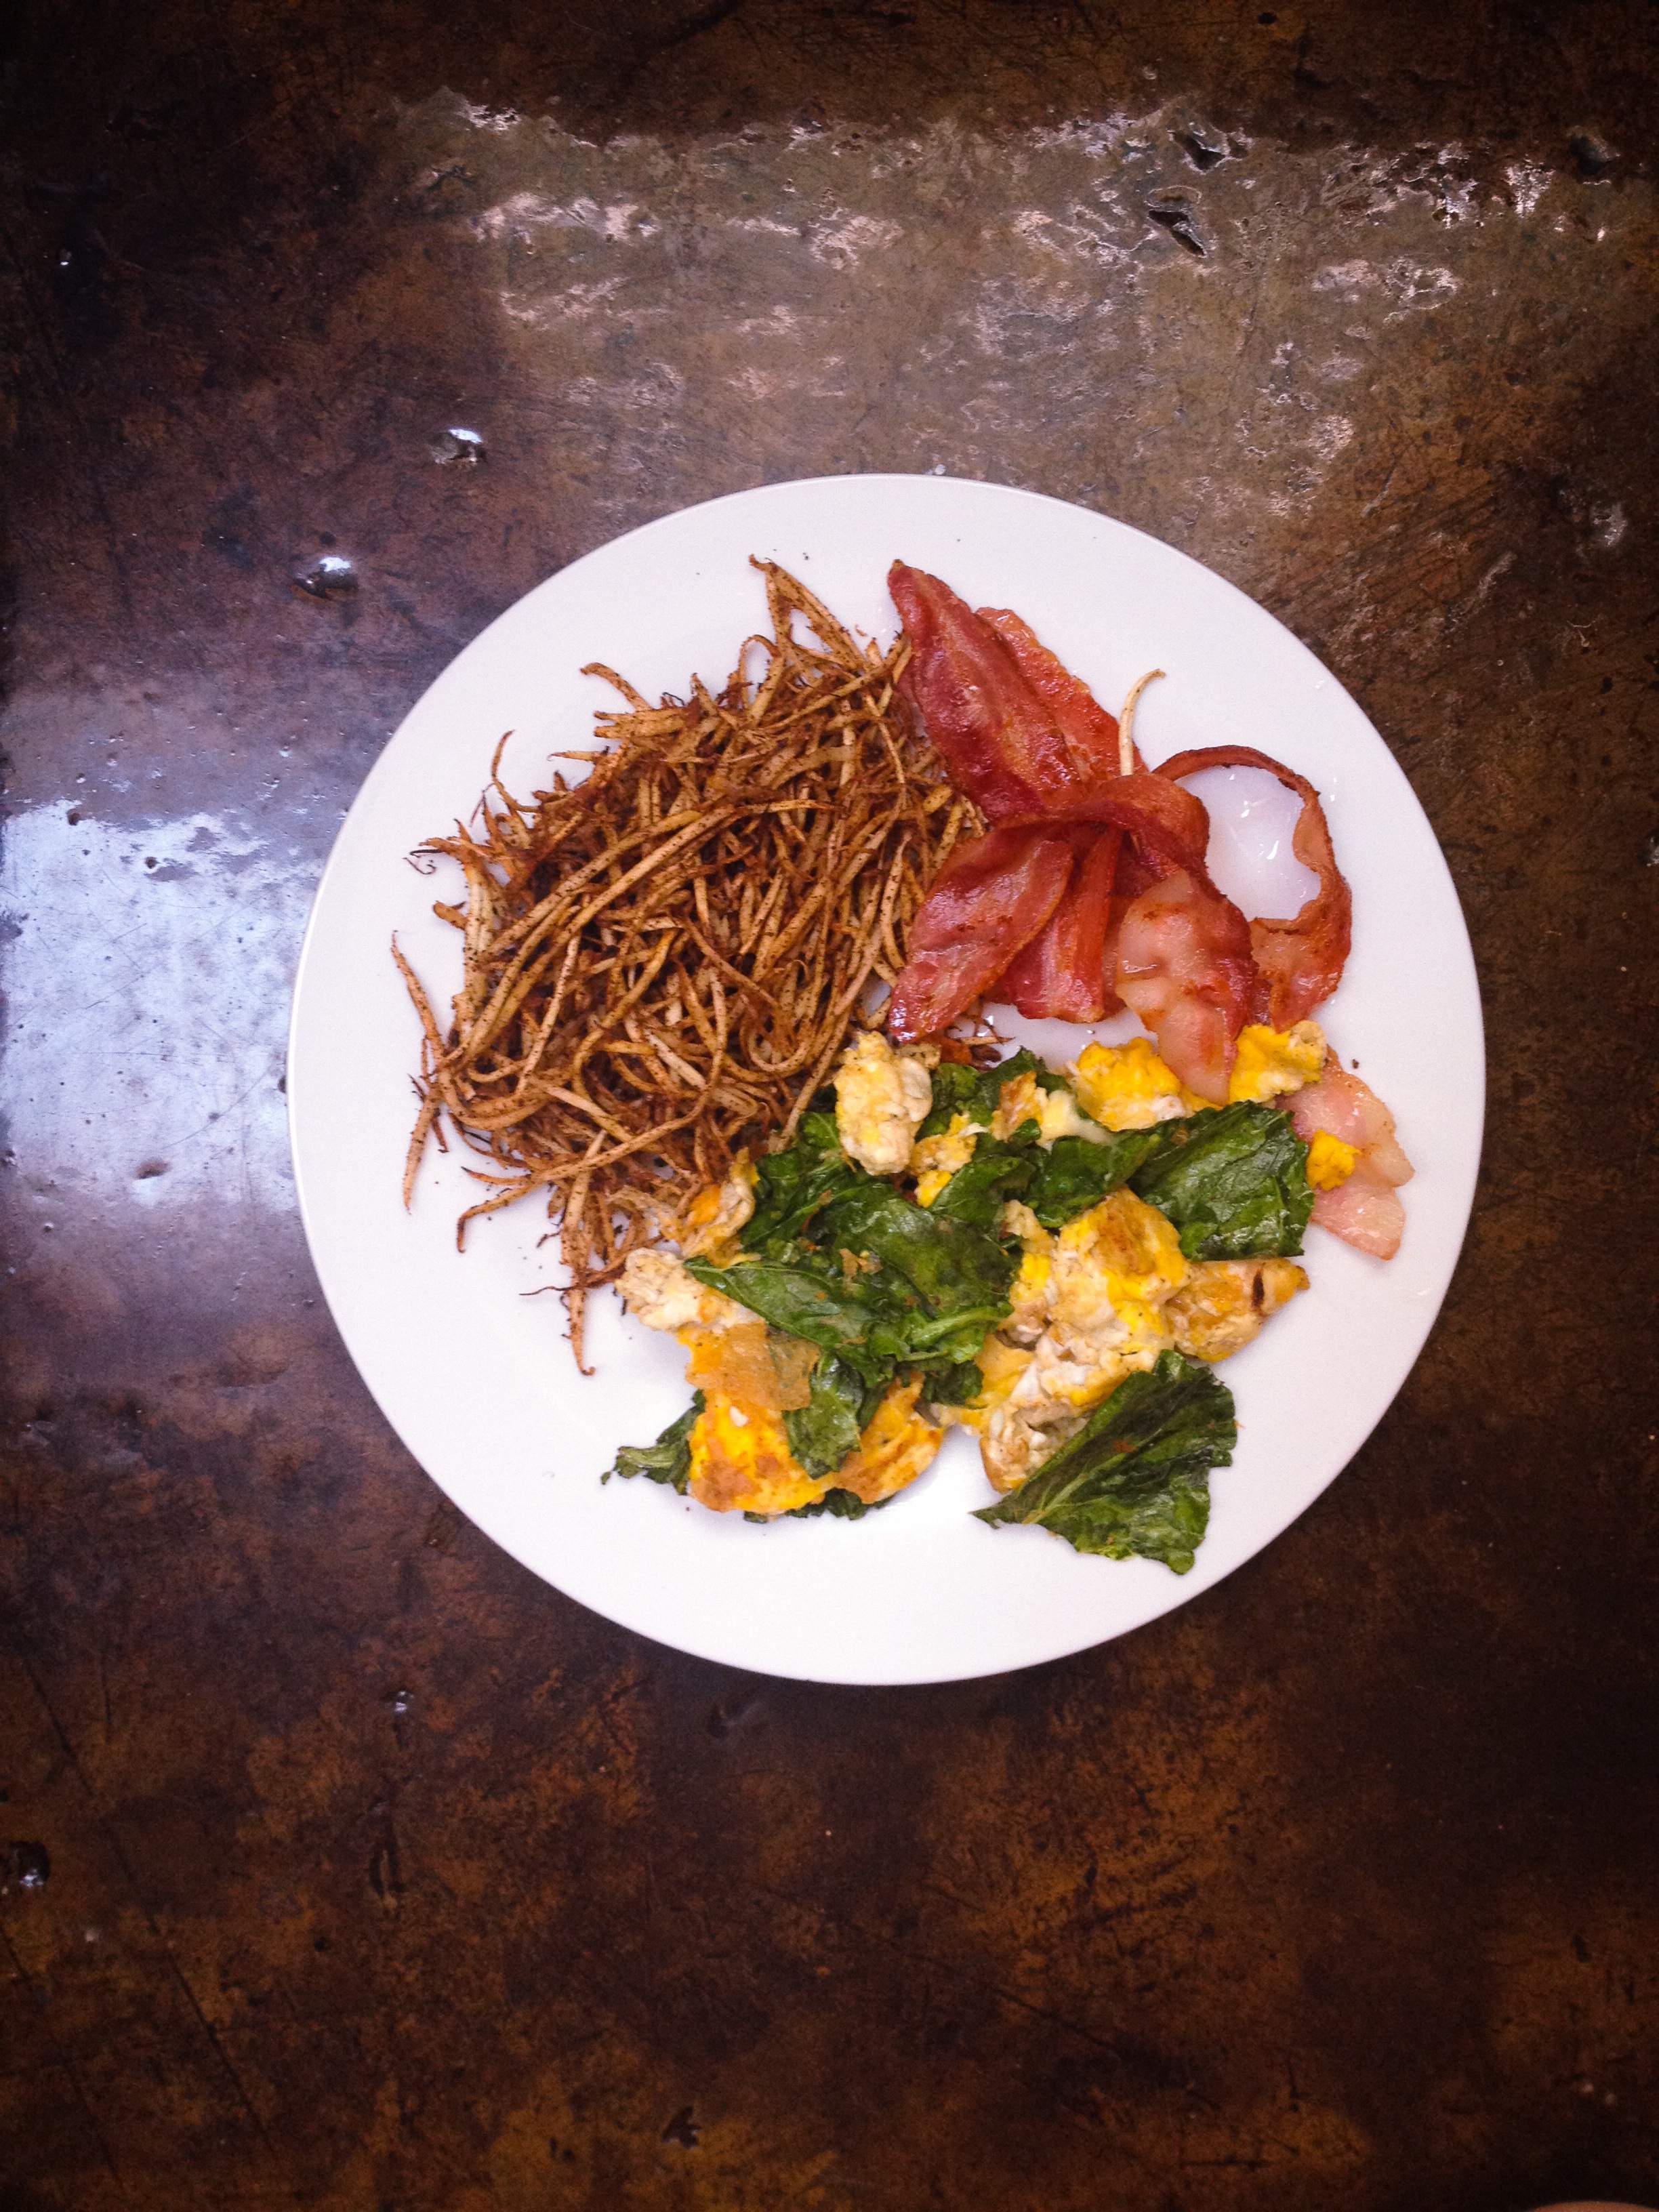 Modern day version of a paleo diet meal (Lauren Barkume&mdash;Getty Images/Flickr Open)